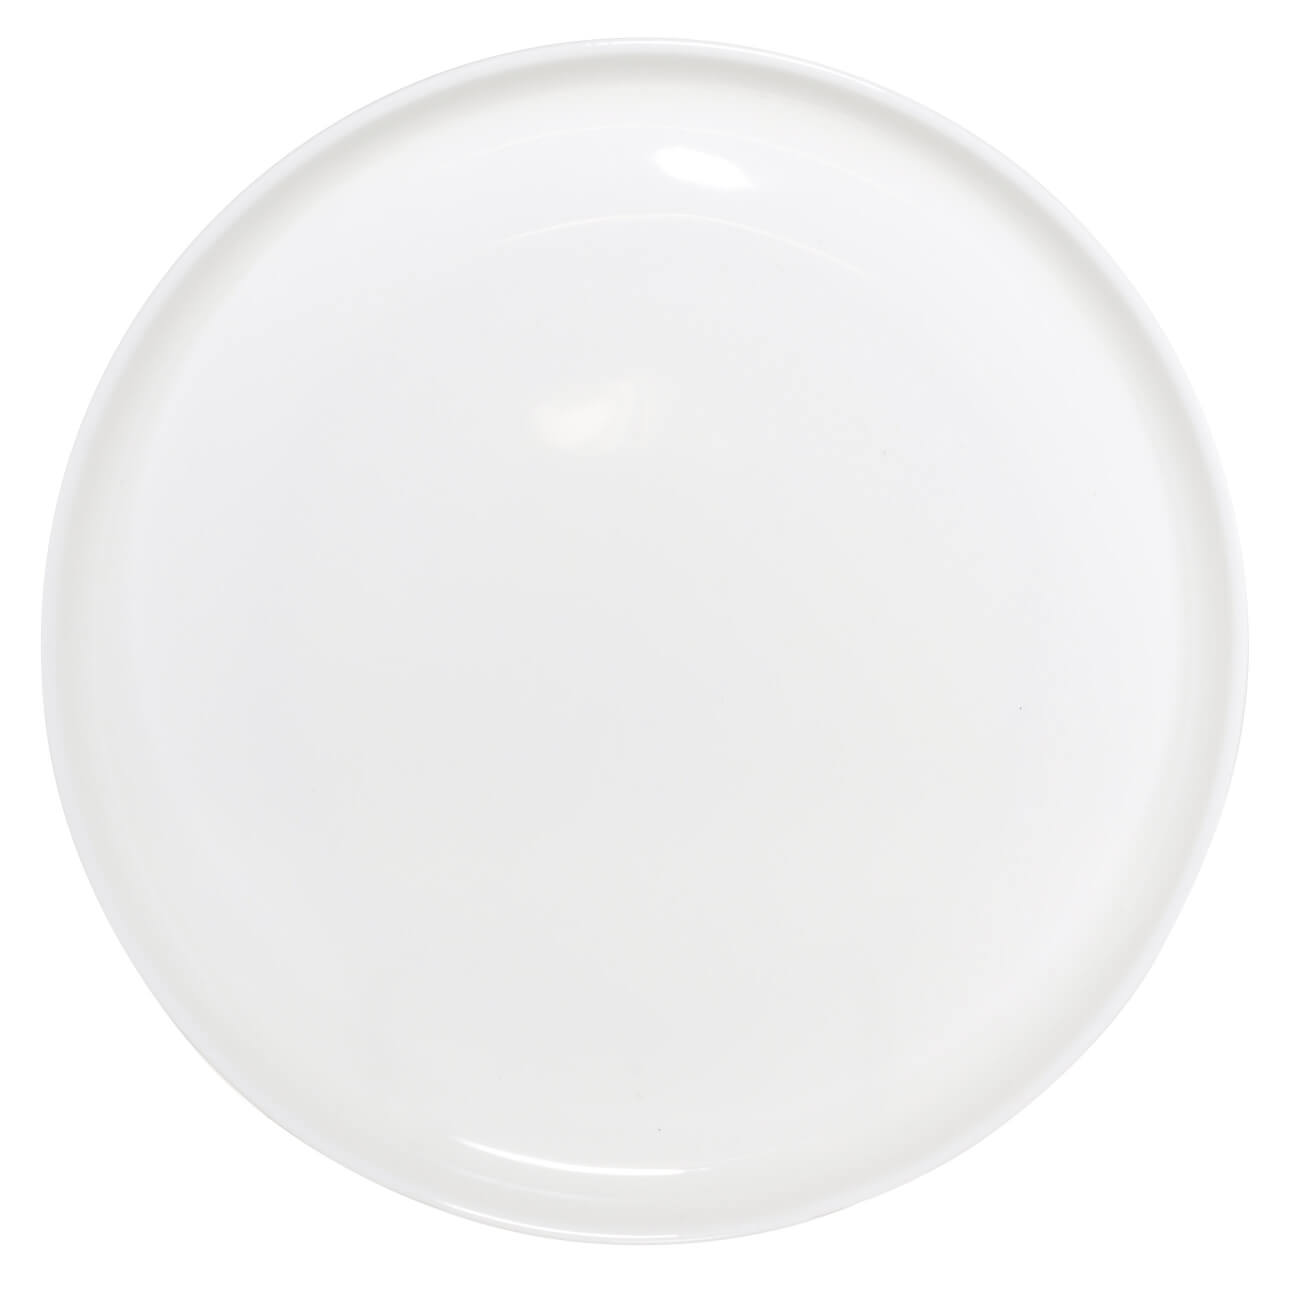 Тарелка обеденная, 26 см, фарфор F, белая, Ideal white тарелка десертная 20 см 2 шт фарфор f белая ideal white